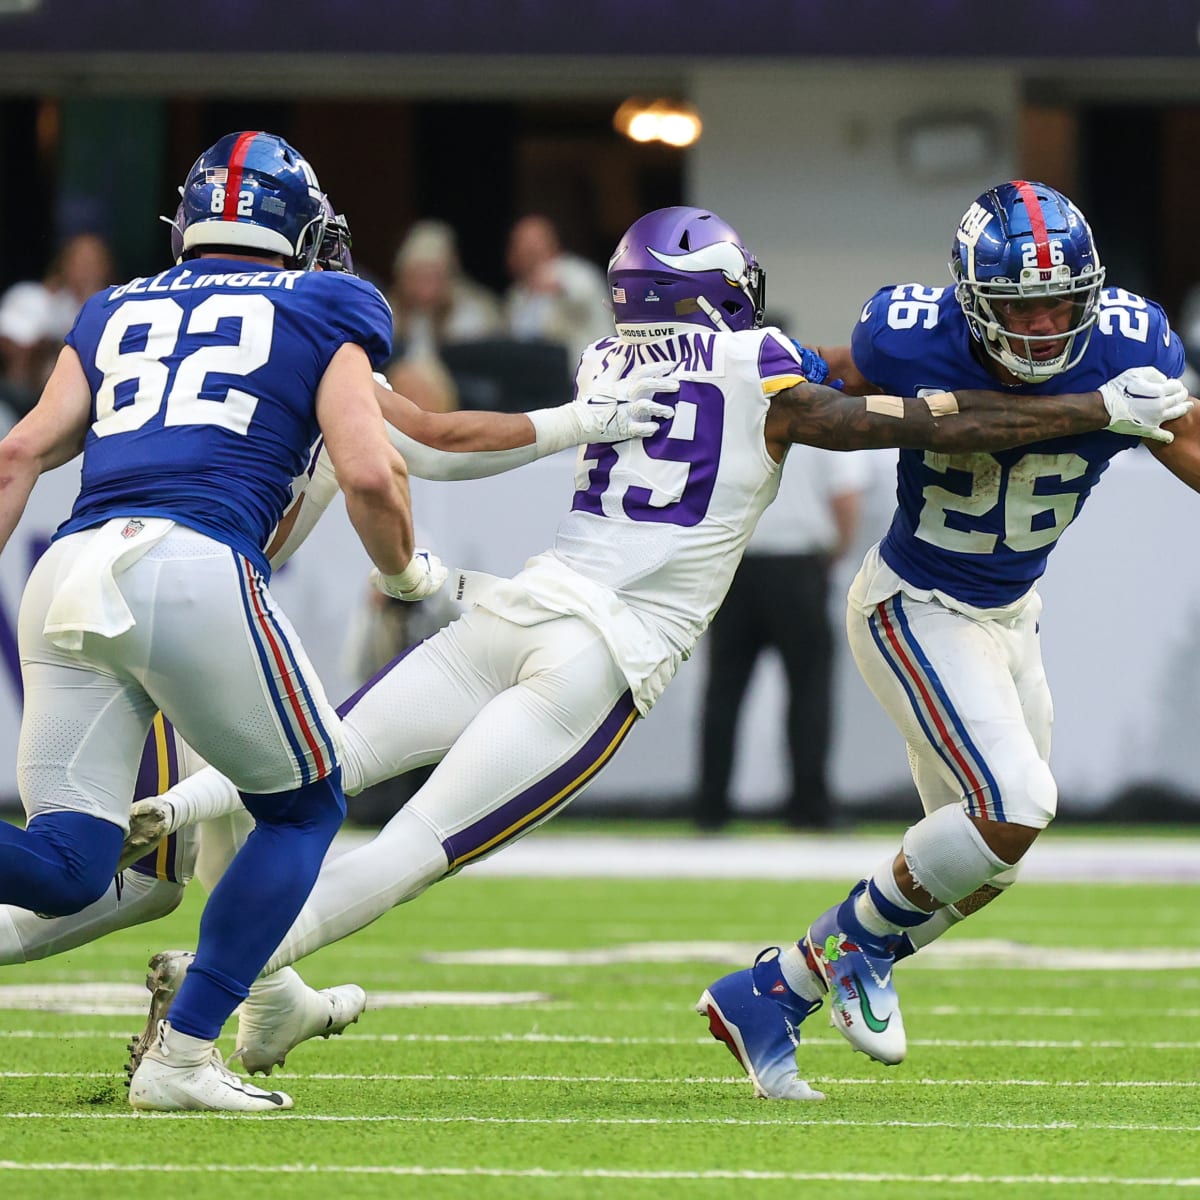 Giants' Saquon Barkley runs for 28-yard TD vs. Vikings - ESPN